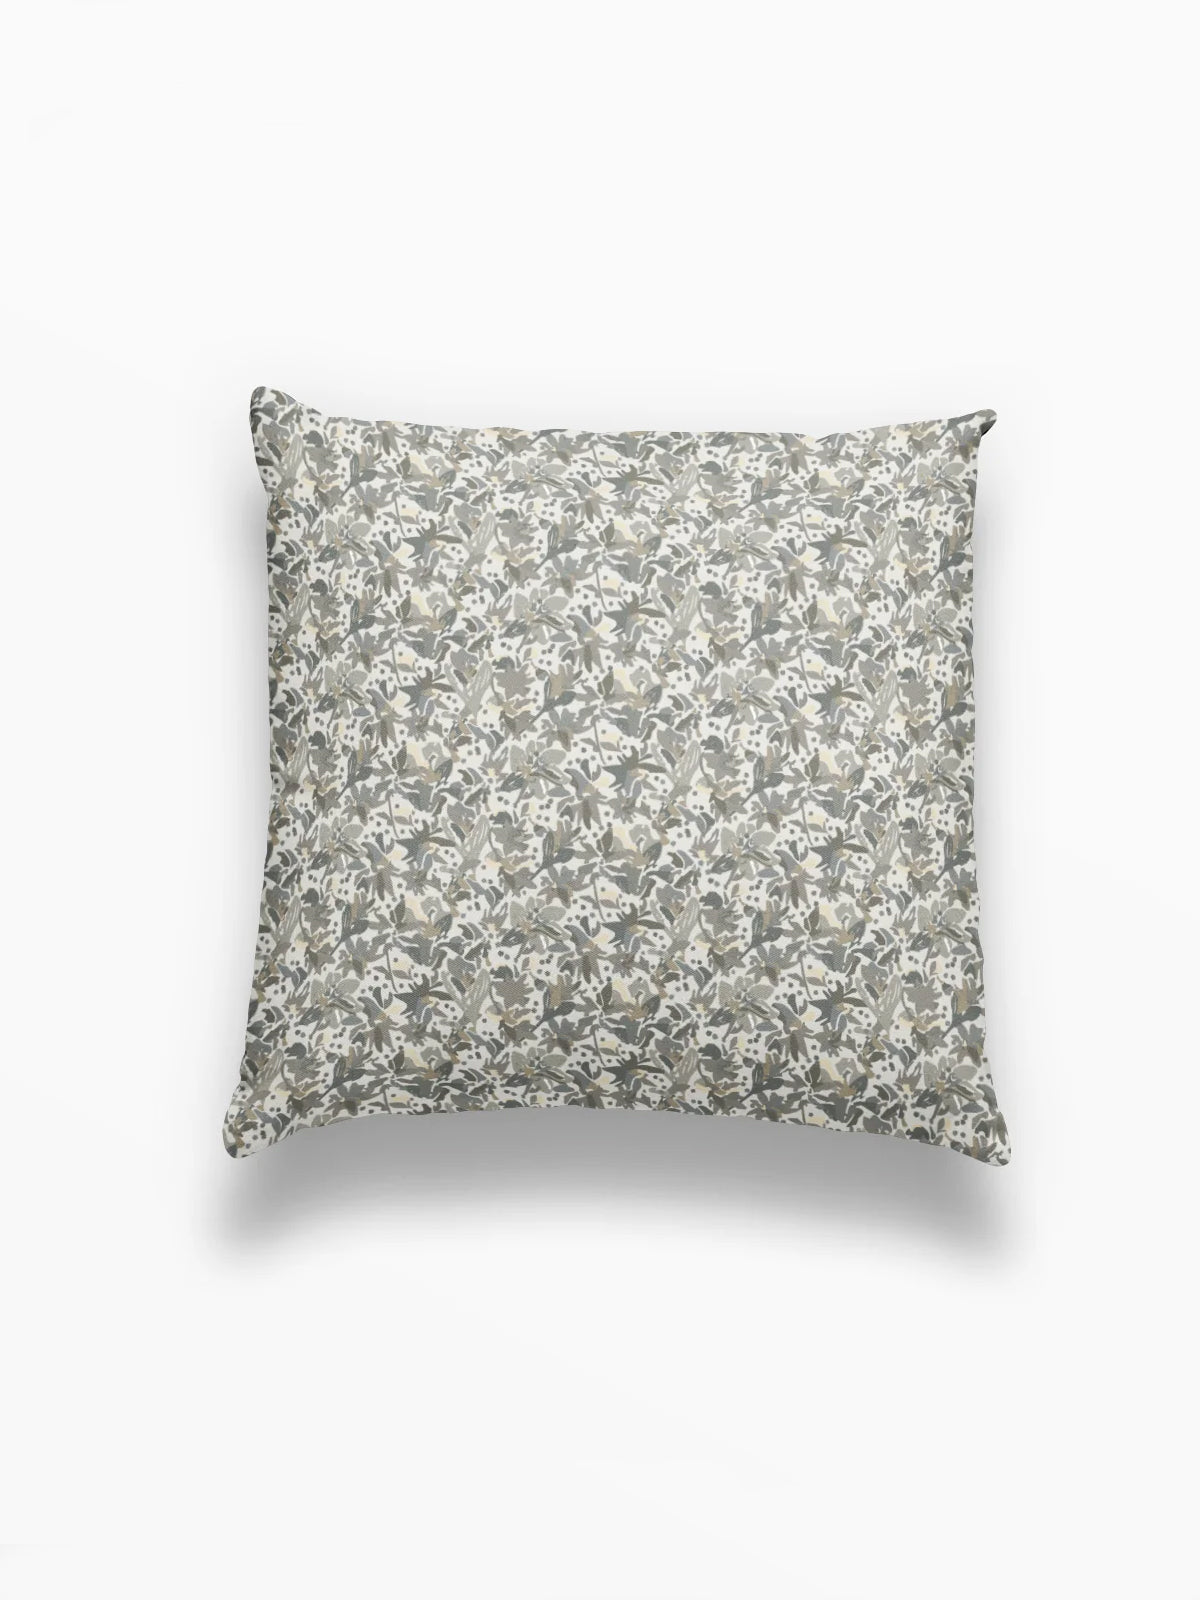 "Eden in Lichen" Pillow Cover by Emily Daws